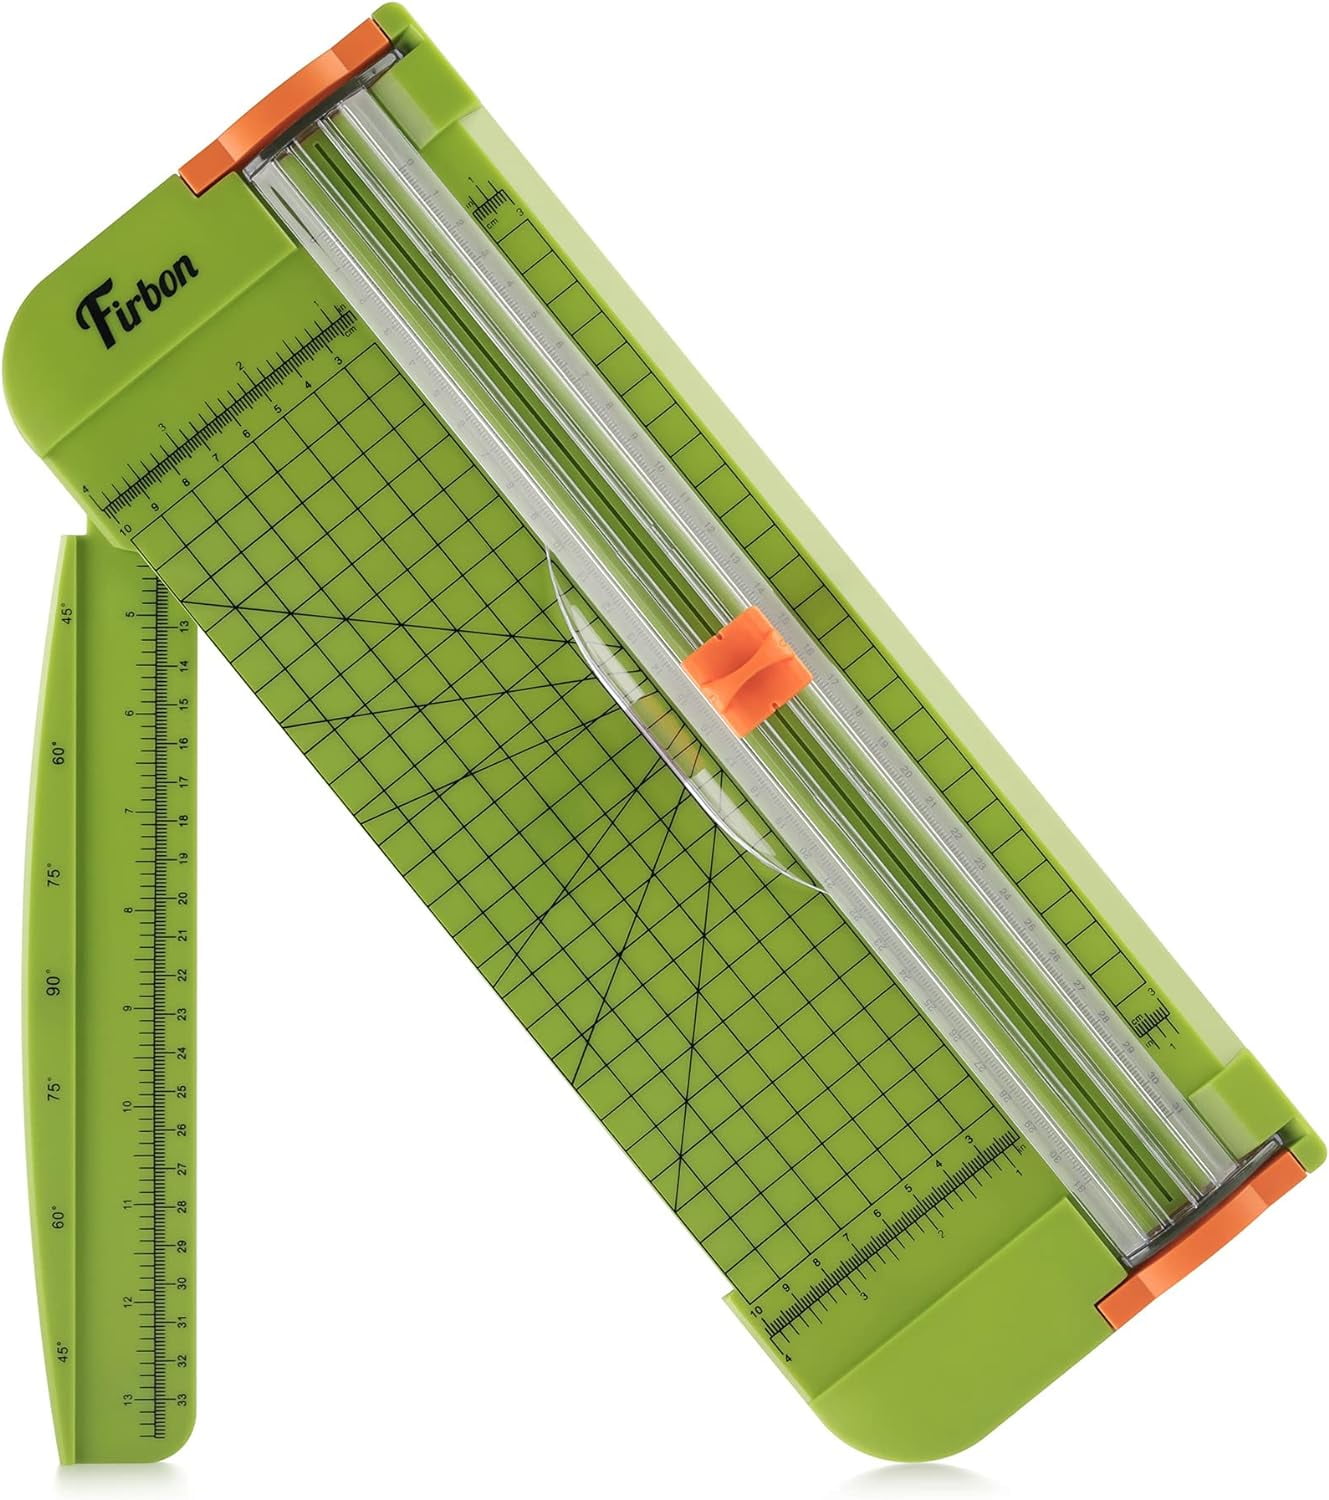 FERVI 0096/L - Paper cutter blade set 104mm (10 pcs.)